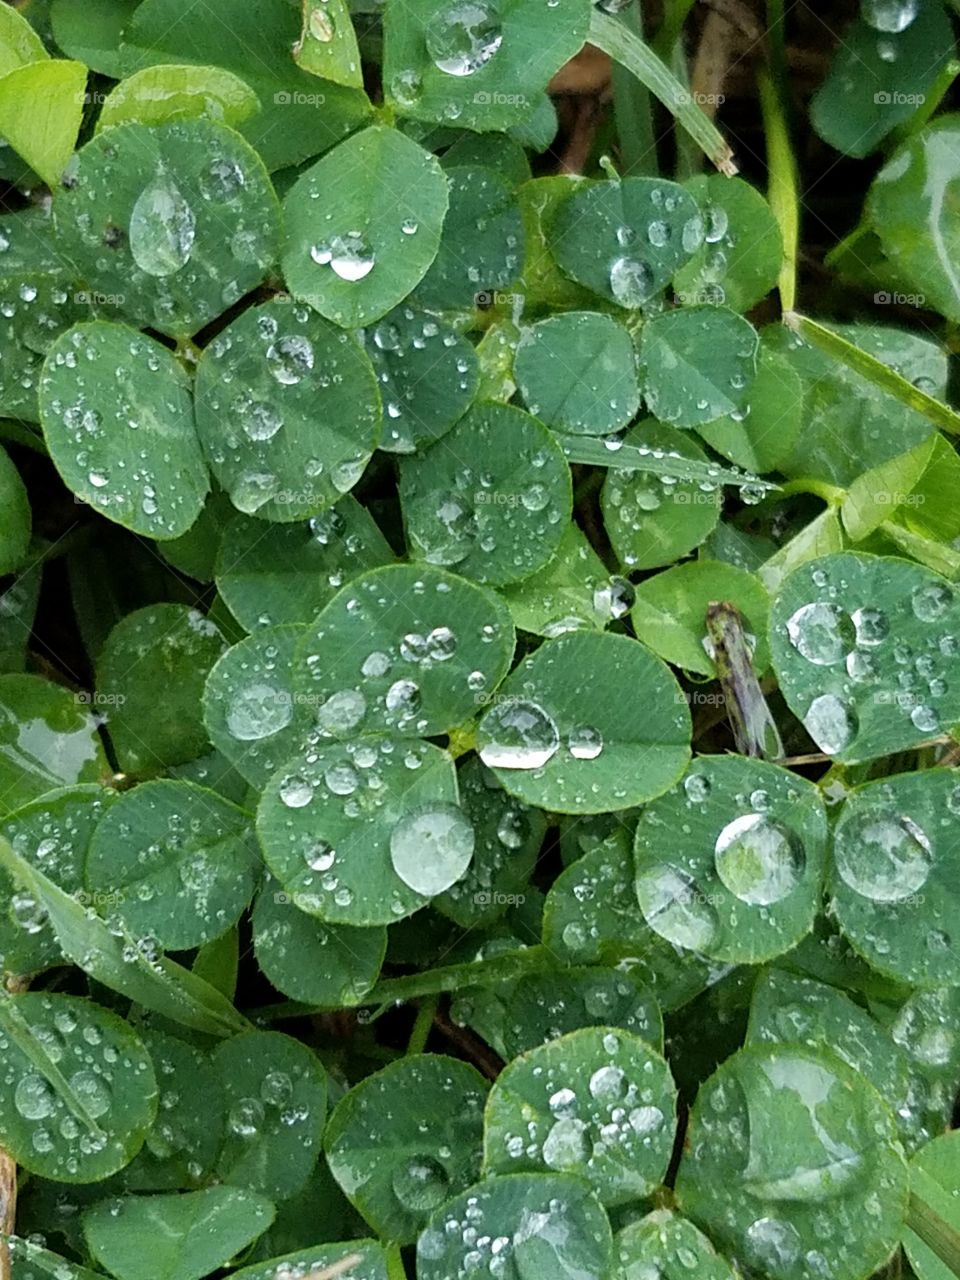 raindrops on clovers.